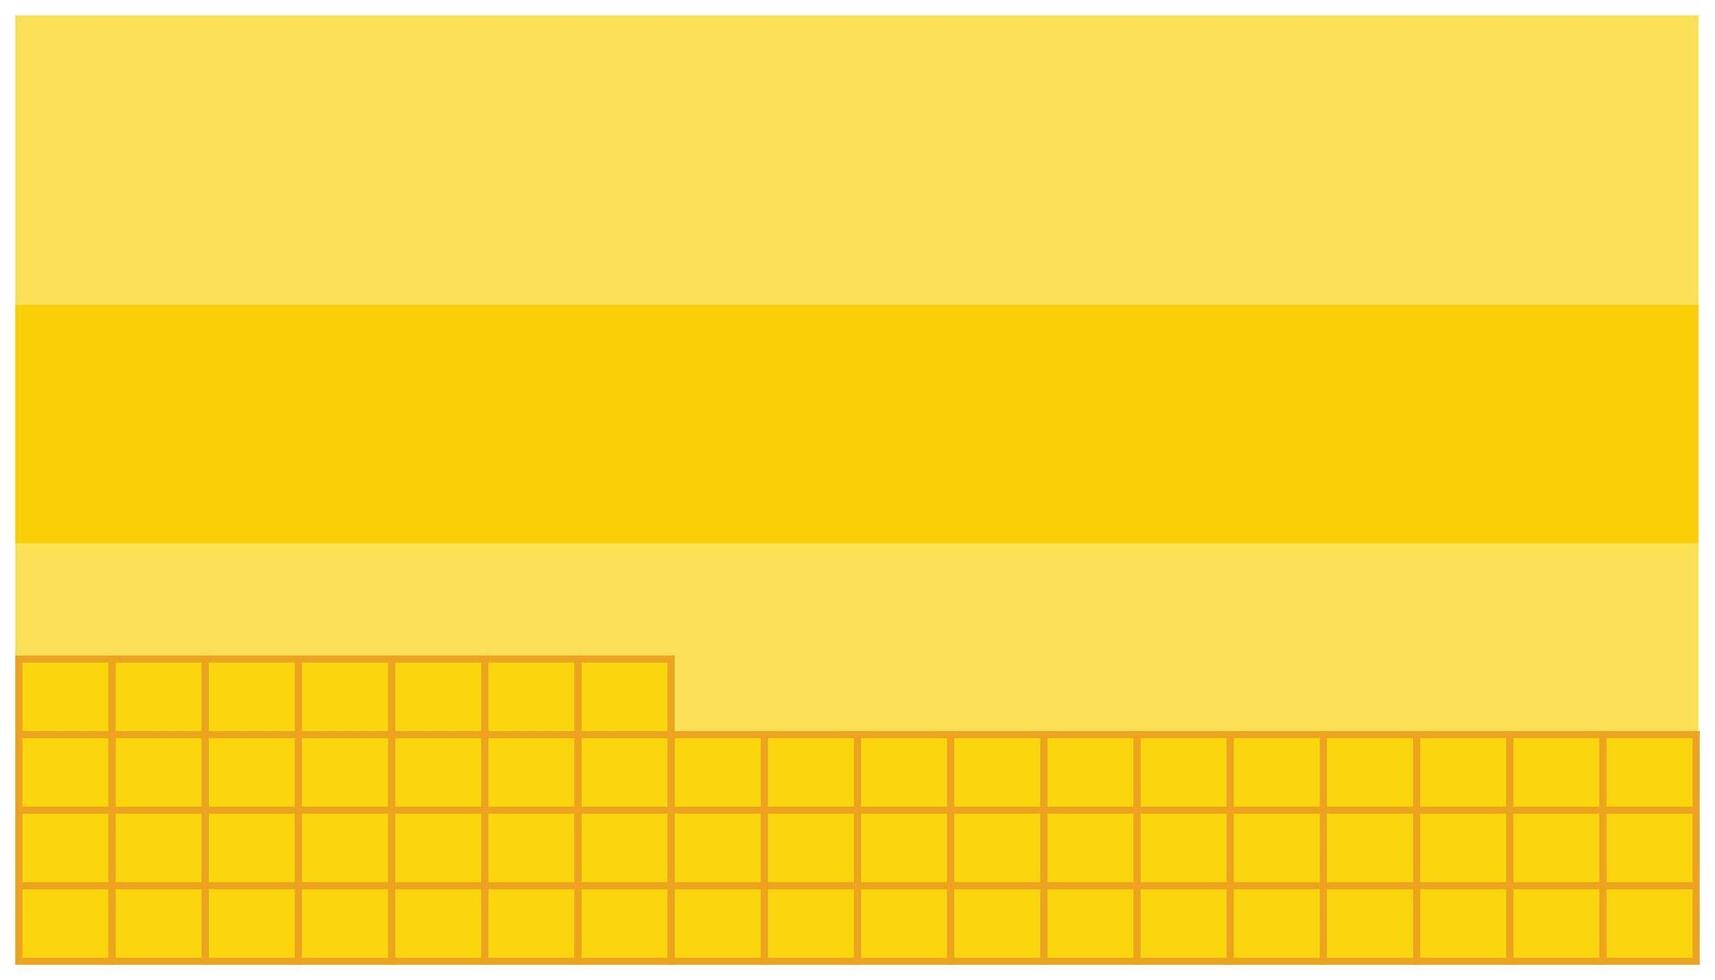 illustration av en gul bakgrund med en rutig mönster. Resurser grafisk bakgrund element design. vektor illustration med en kök dekoration tema